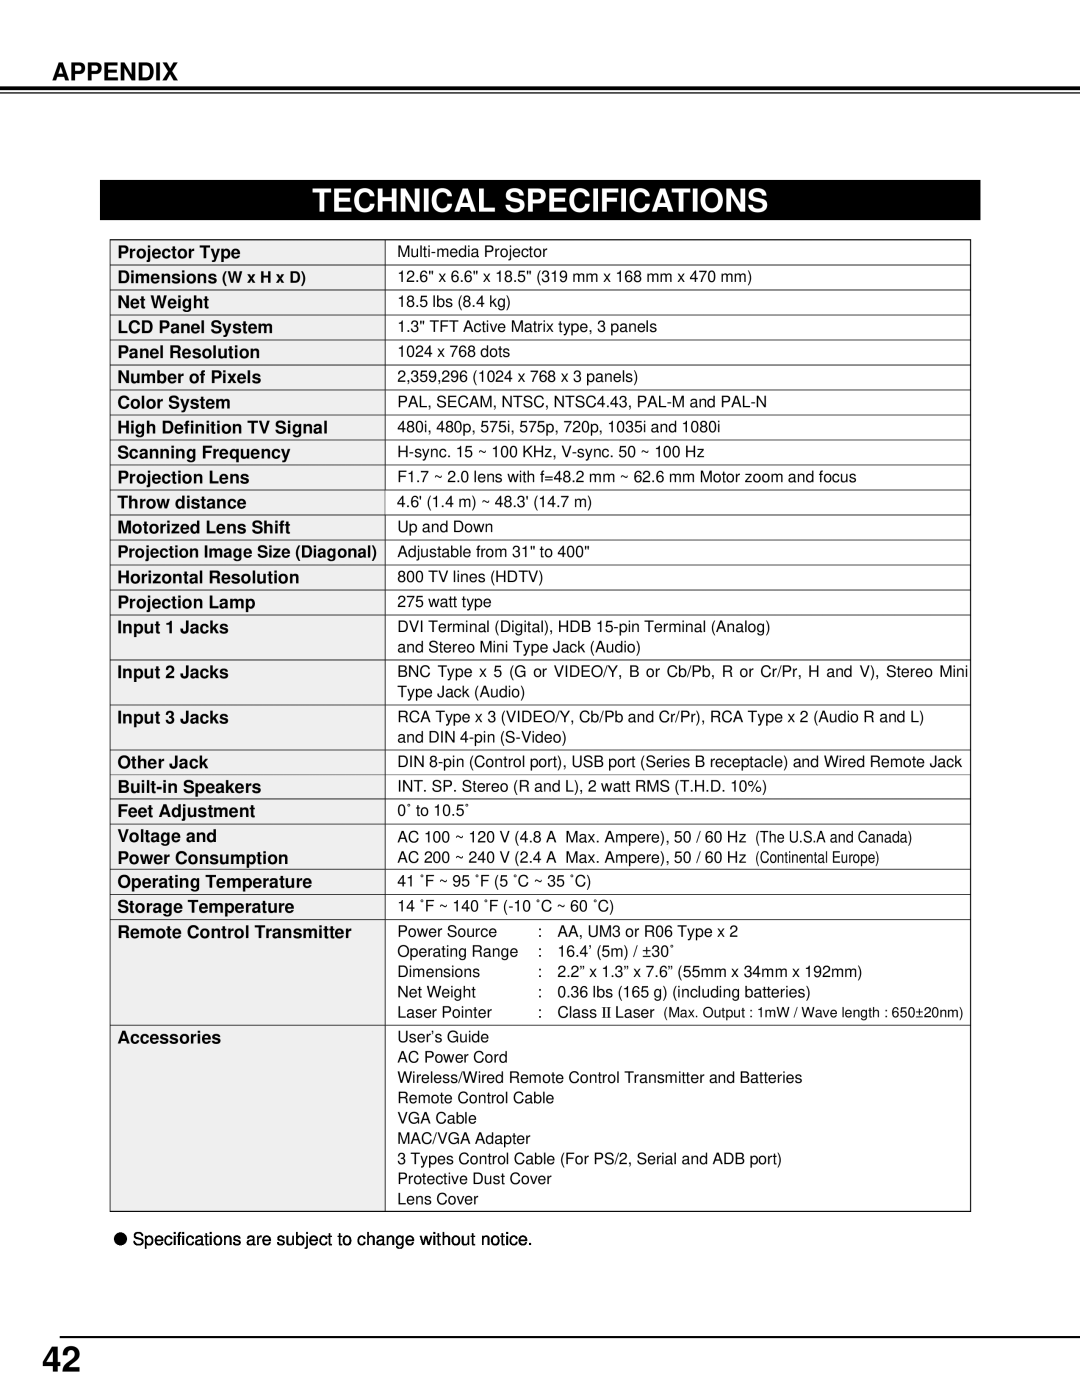 BOXLIGHT MP-42T manual Technical Specifications, Appendix 